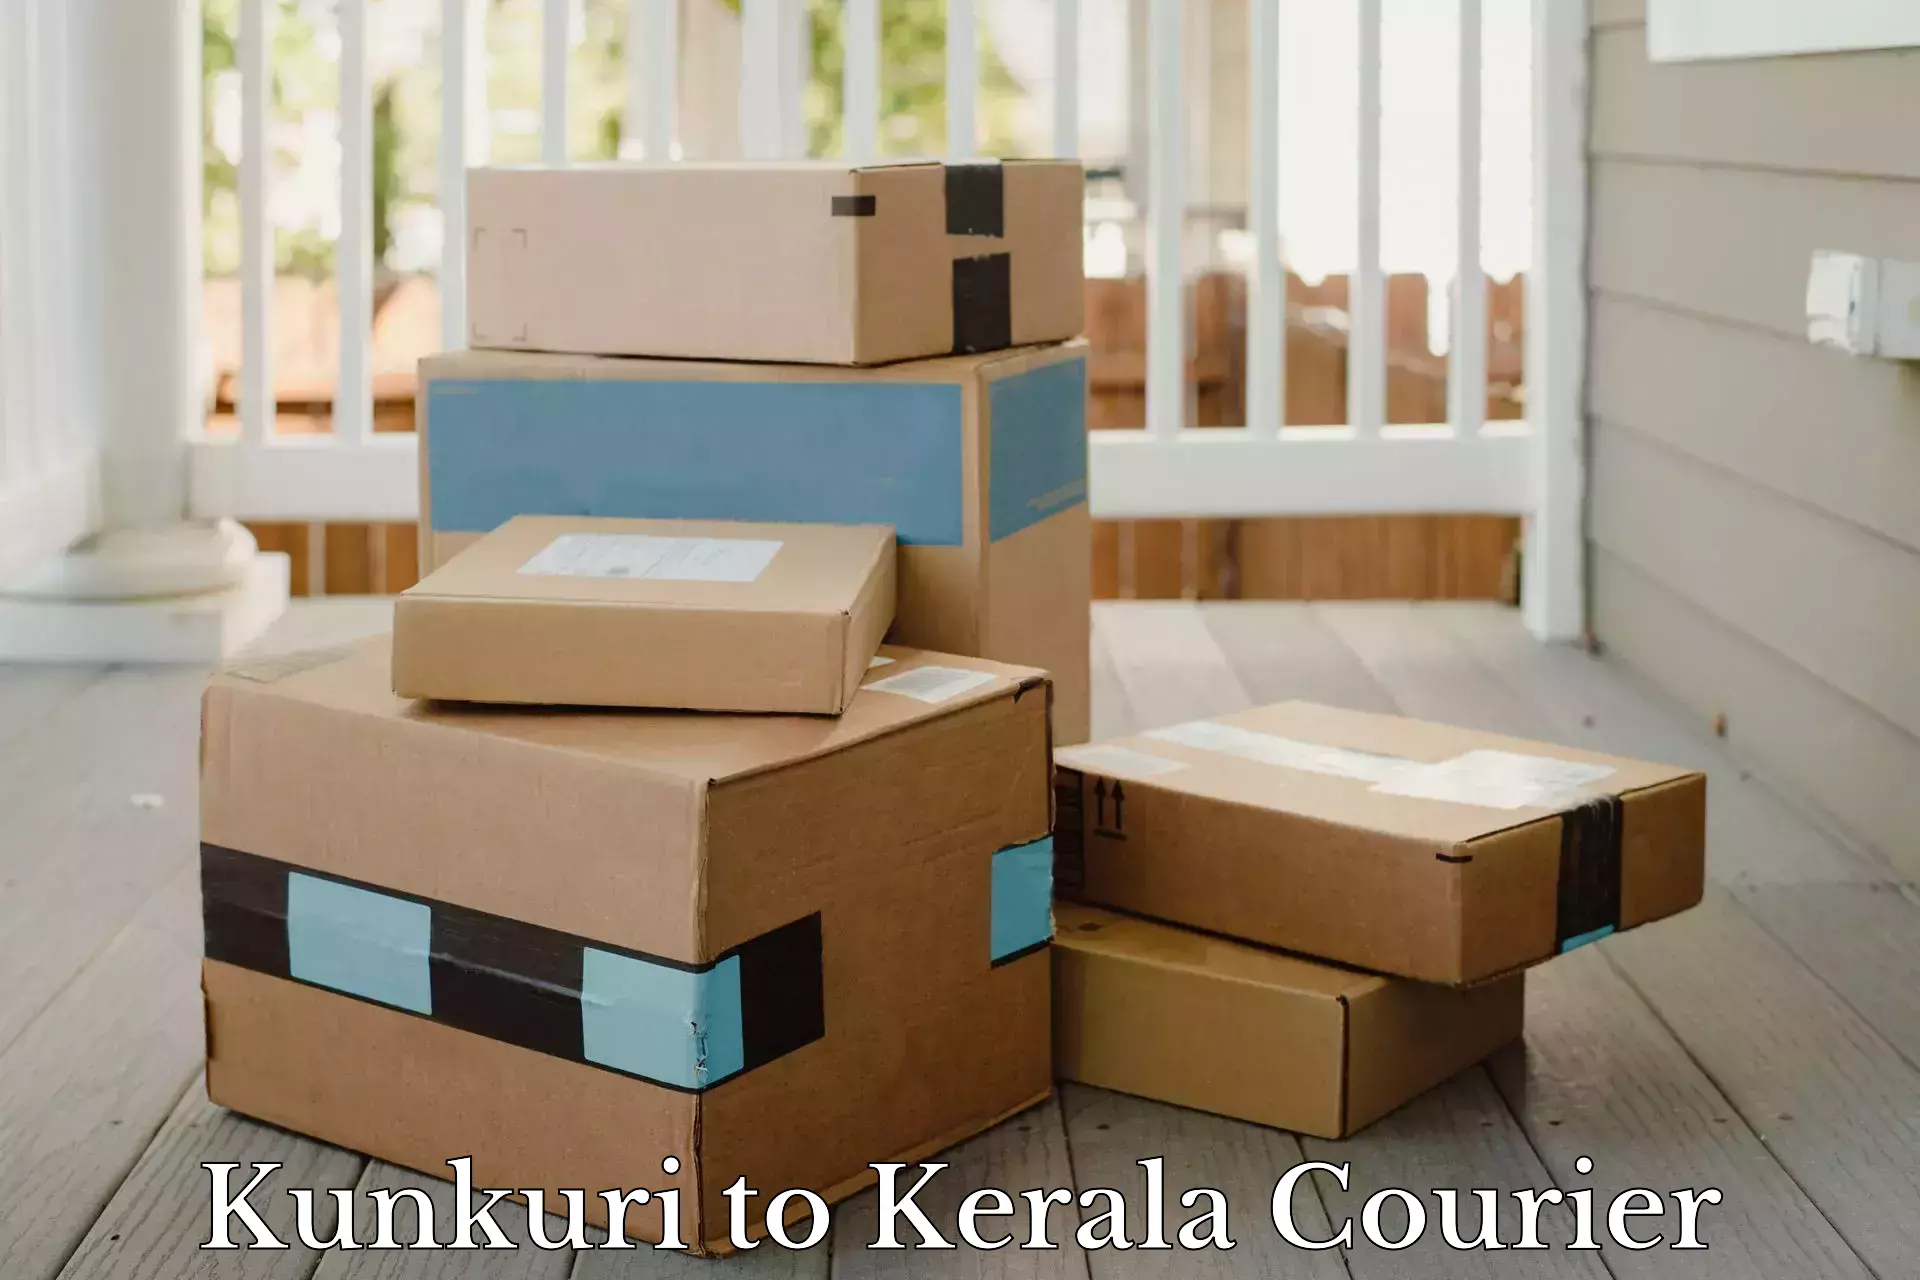 Express mail service Kunkuri to Kerala